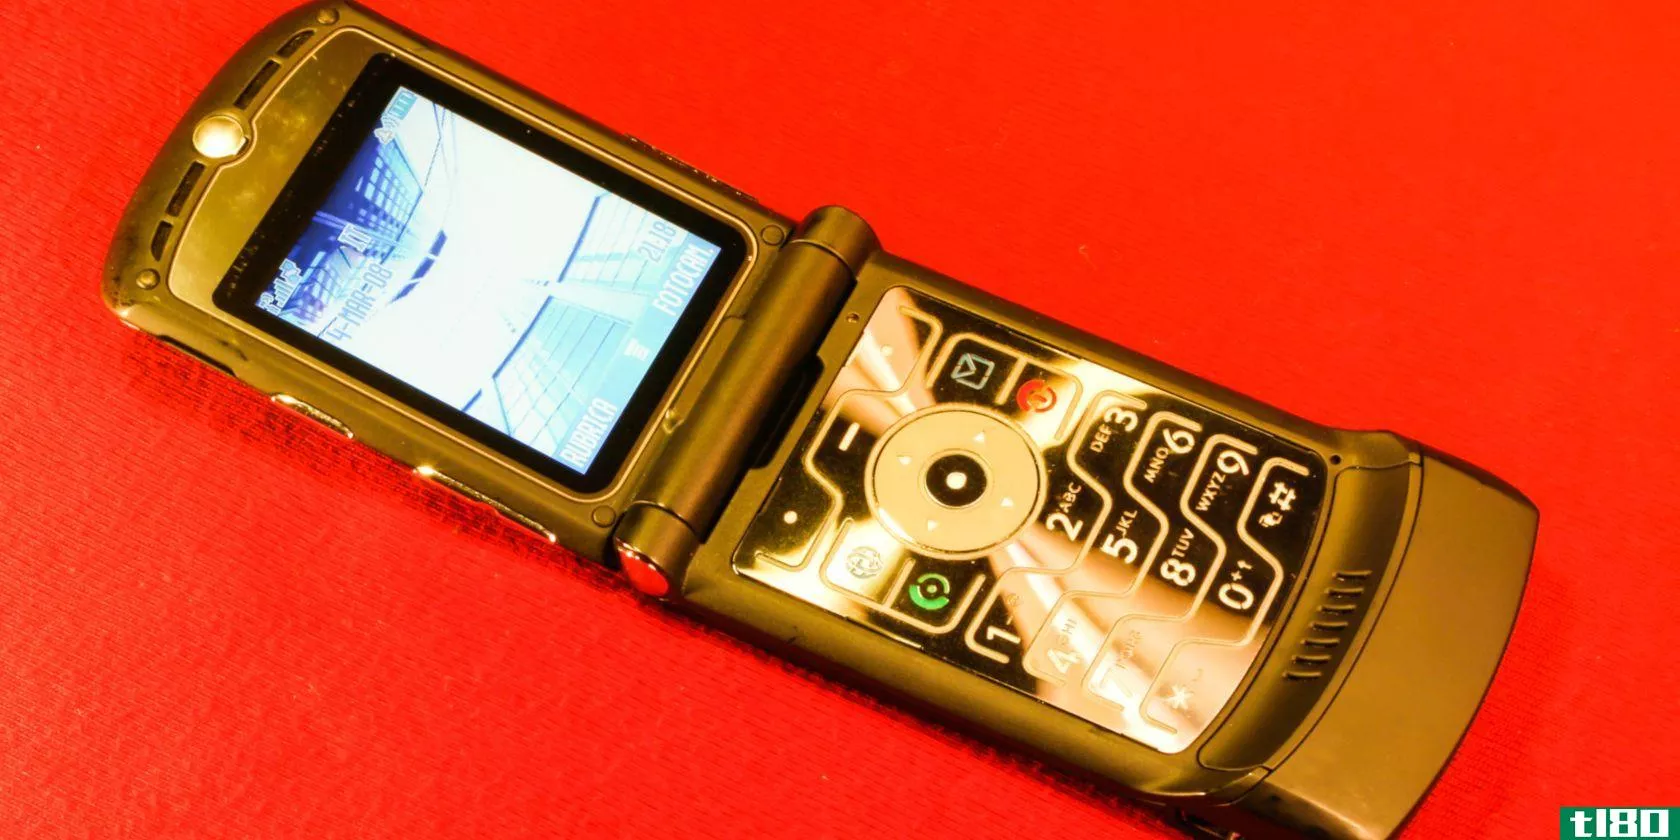 A motorola Razr phone on a red background